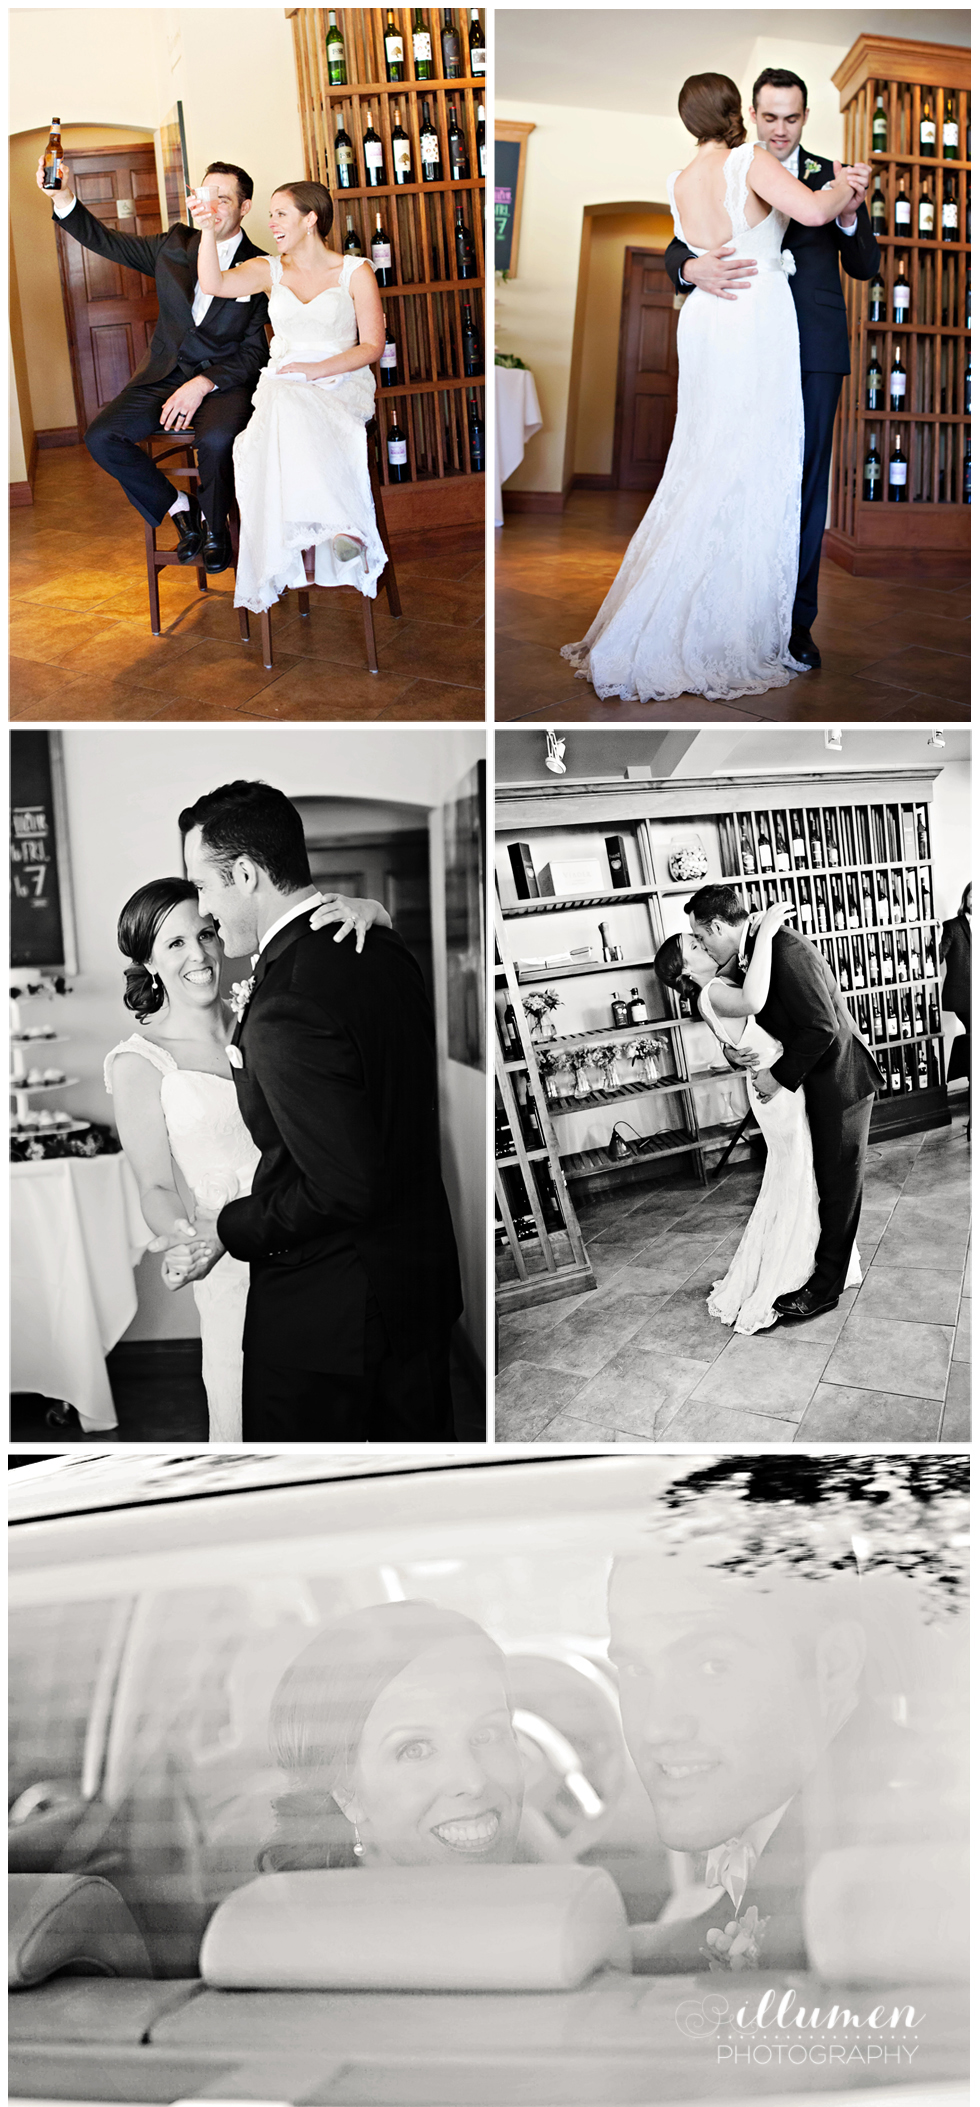 St. Louis Wedding Photography; www.illumenphotography.com; Illumen Photography